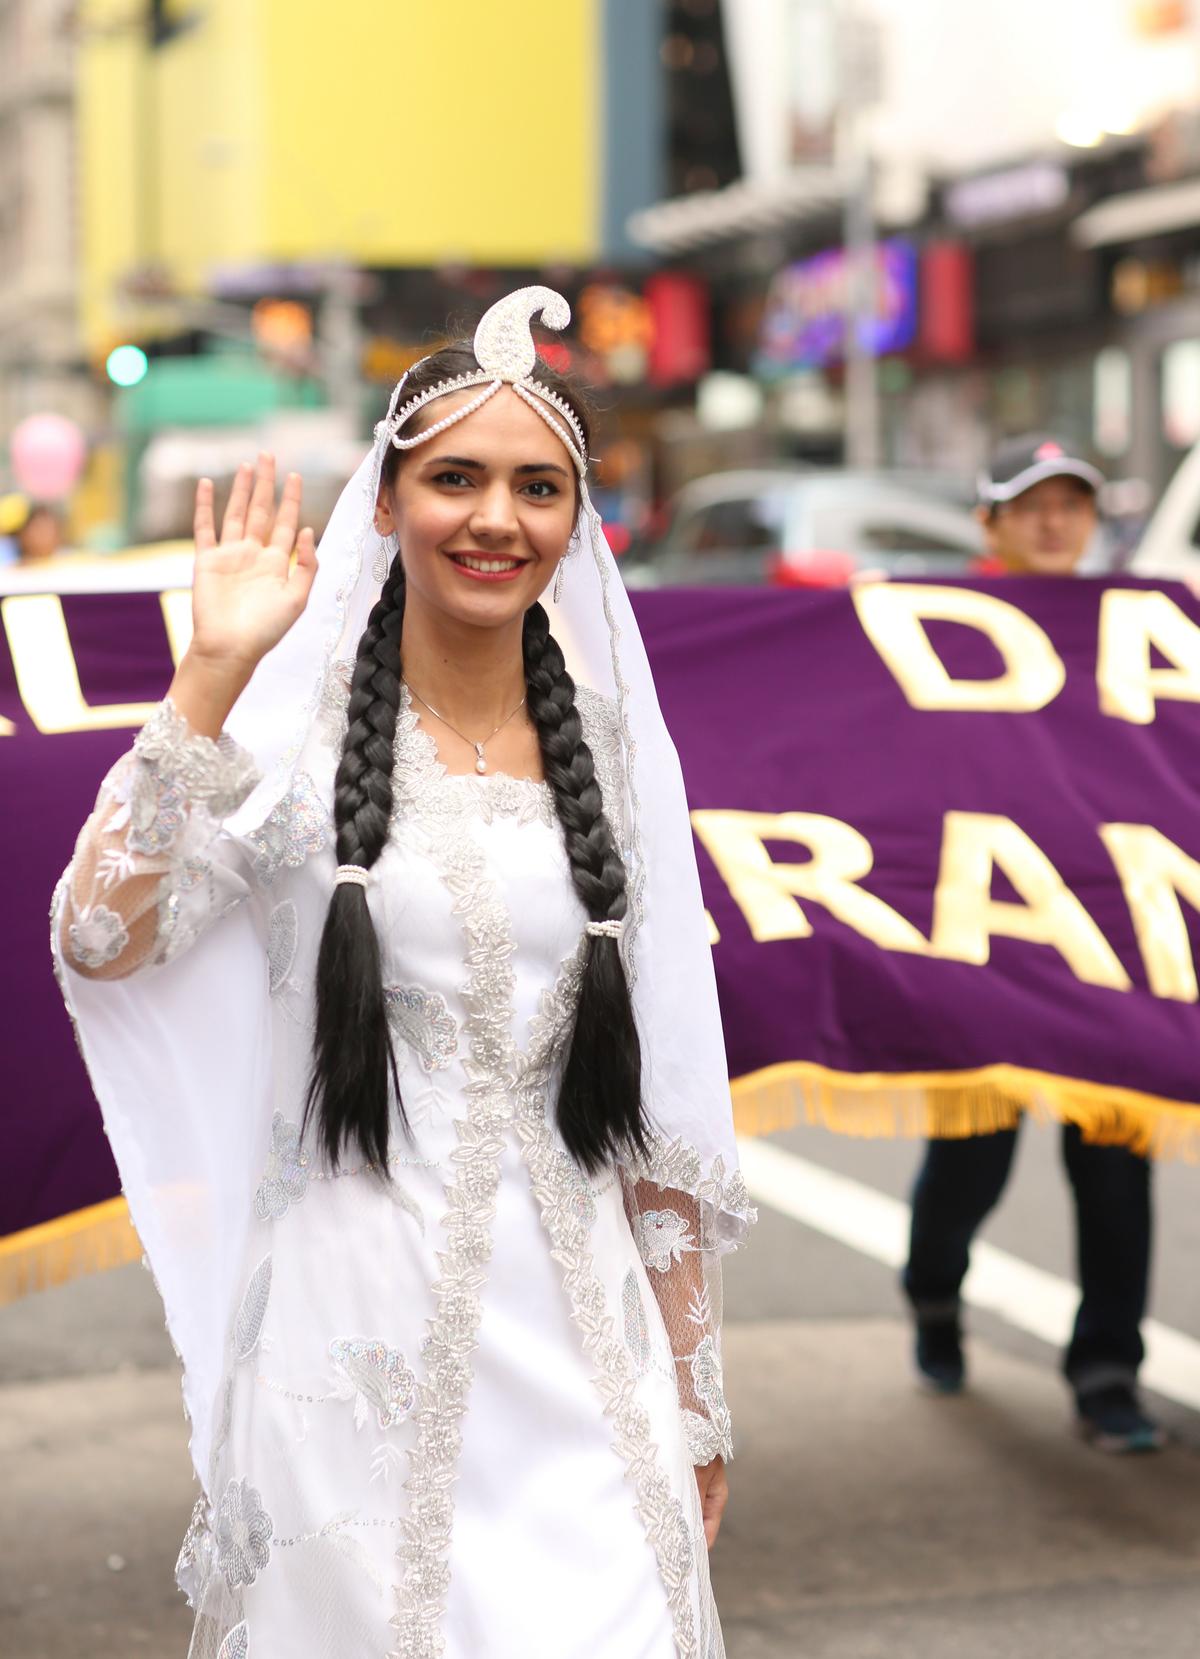 Ghazal Tavanaei, a Falun Dafa practitioner from Iran, marches in the World Falun Dafa parade in New York on May 13, 2016. (Benjamin Chasteen/Epoch Times)